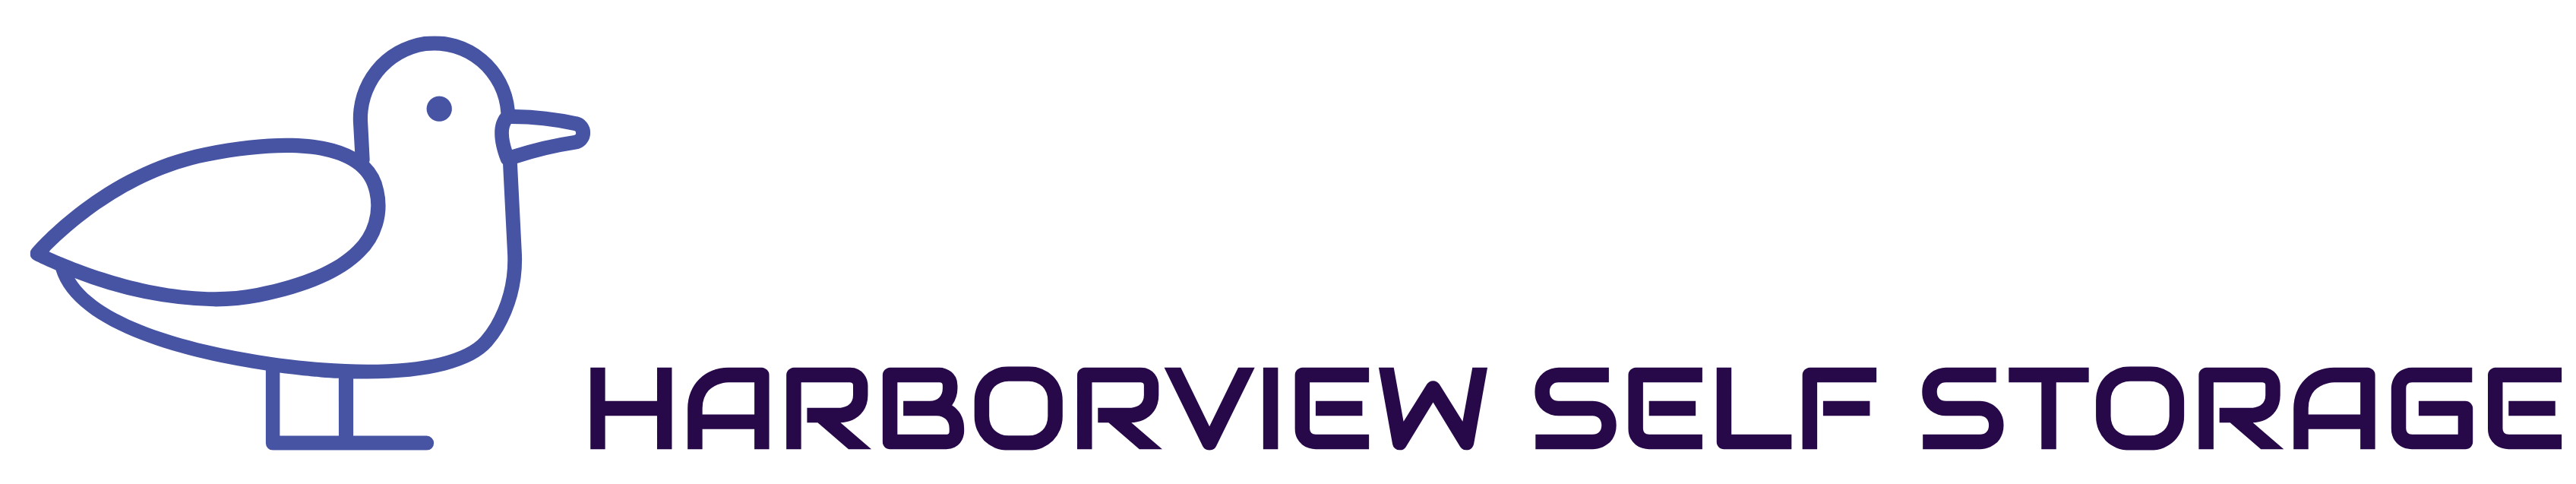 Harborview Self Storage Logo